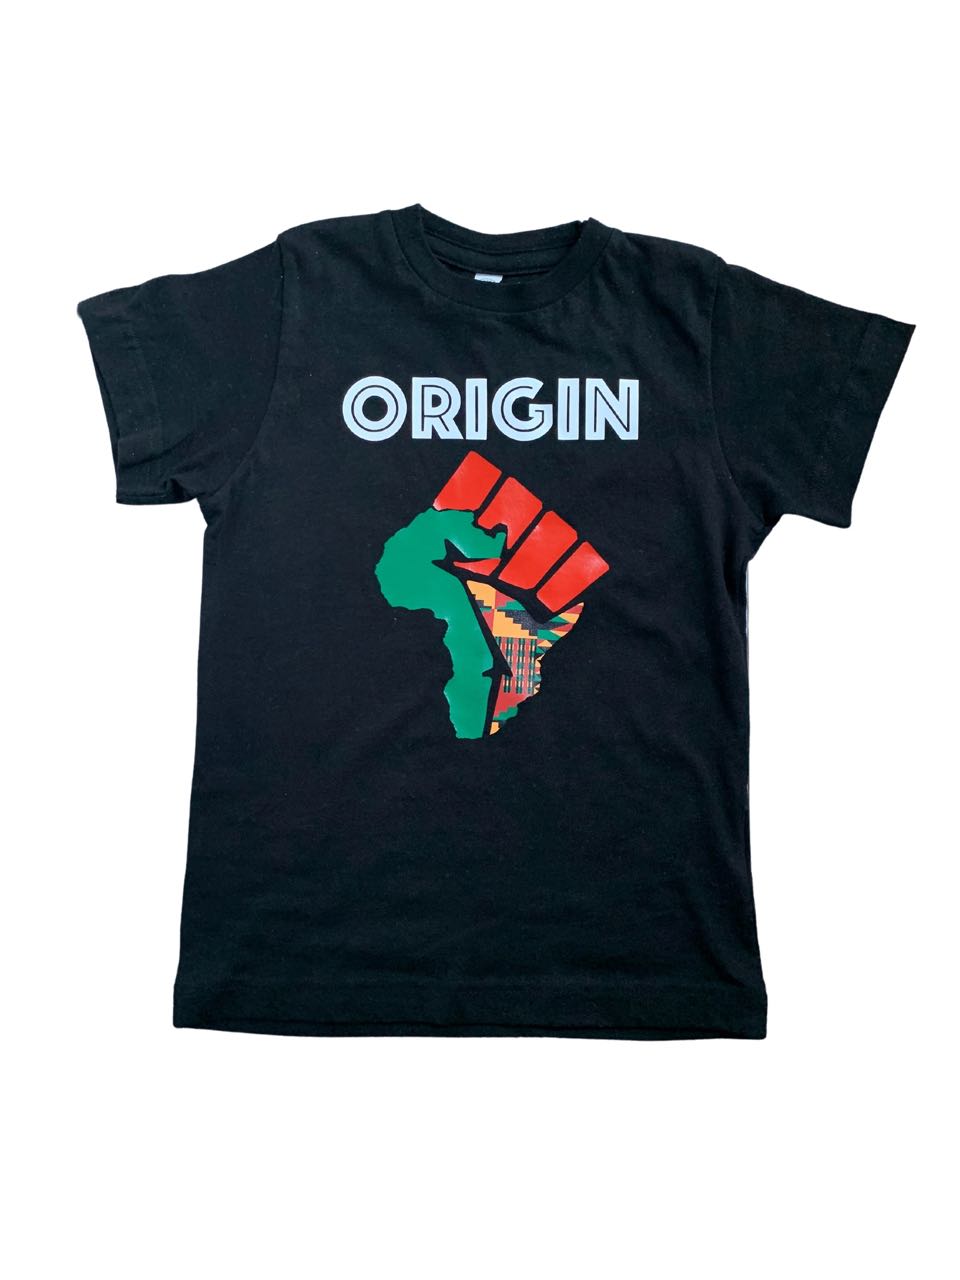 ORIGIN T-shirt Black History Month (Youth)